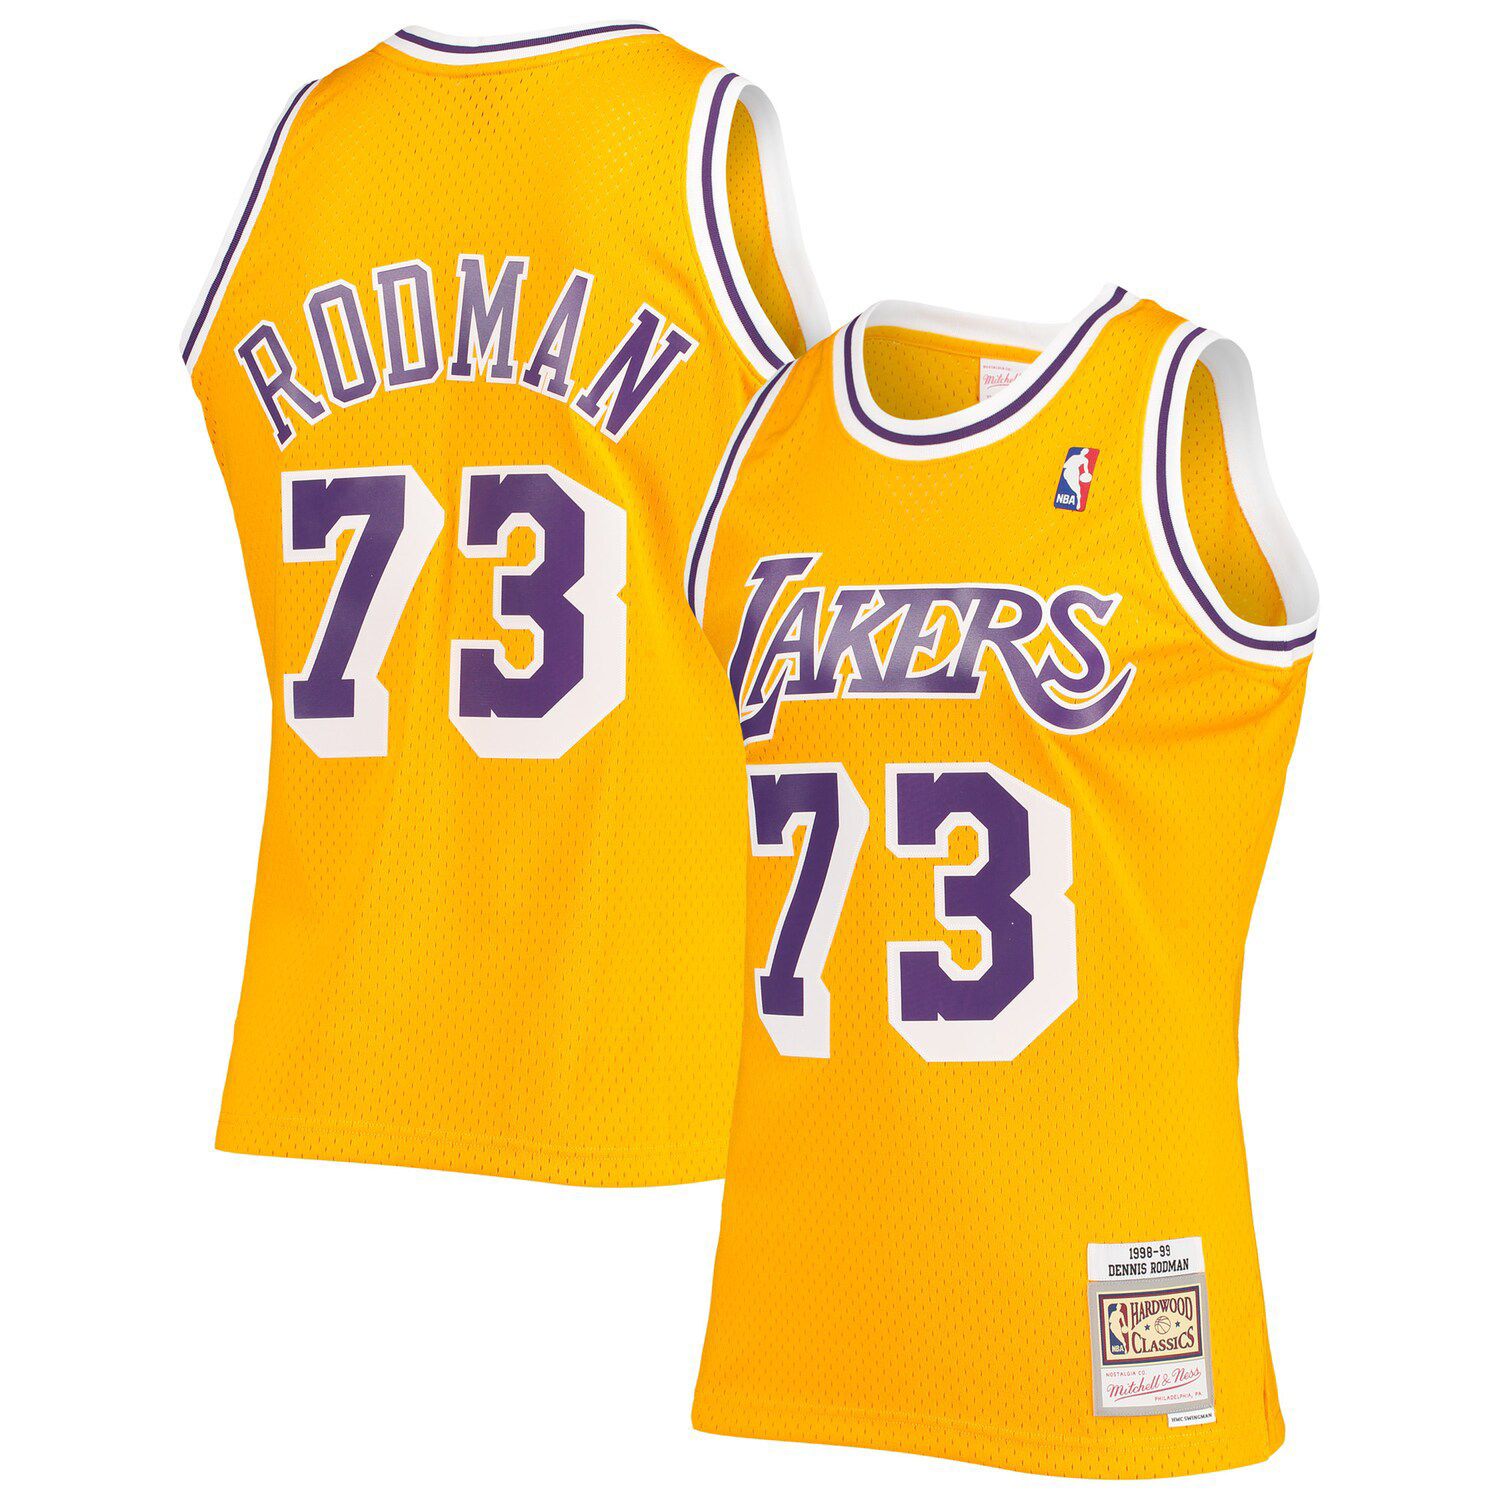 Dennis Rodman Chicago Bulls Mitchell & Ness Hardwood Classics Tie-Dye Name  & Number Tank Top - Black/Red